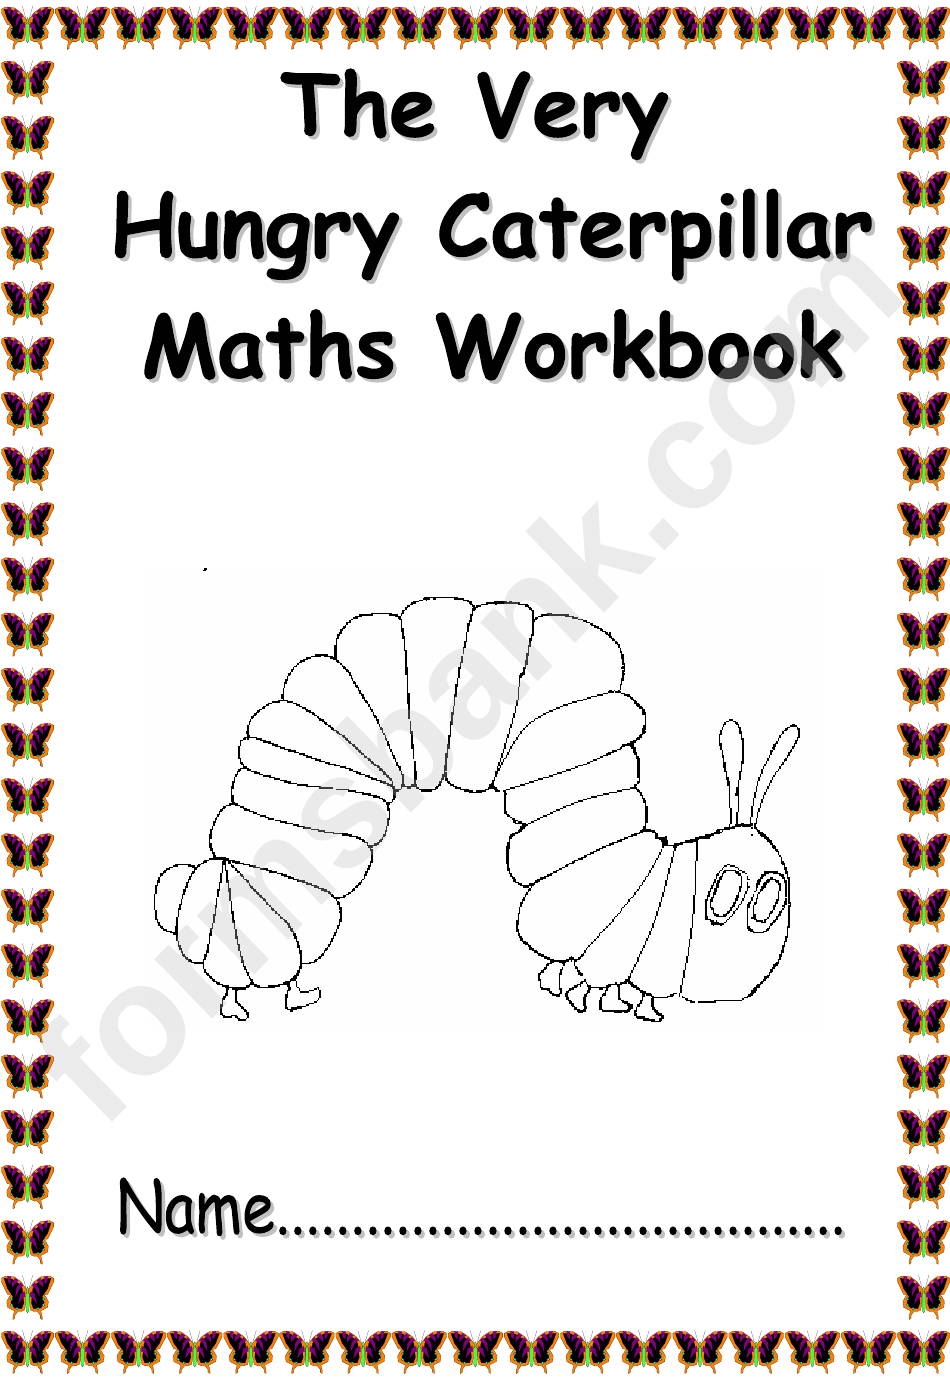 The Very Hungry Caterpillar Maths Workbook